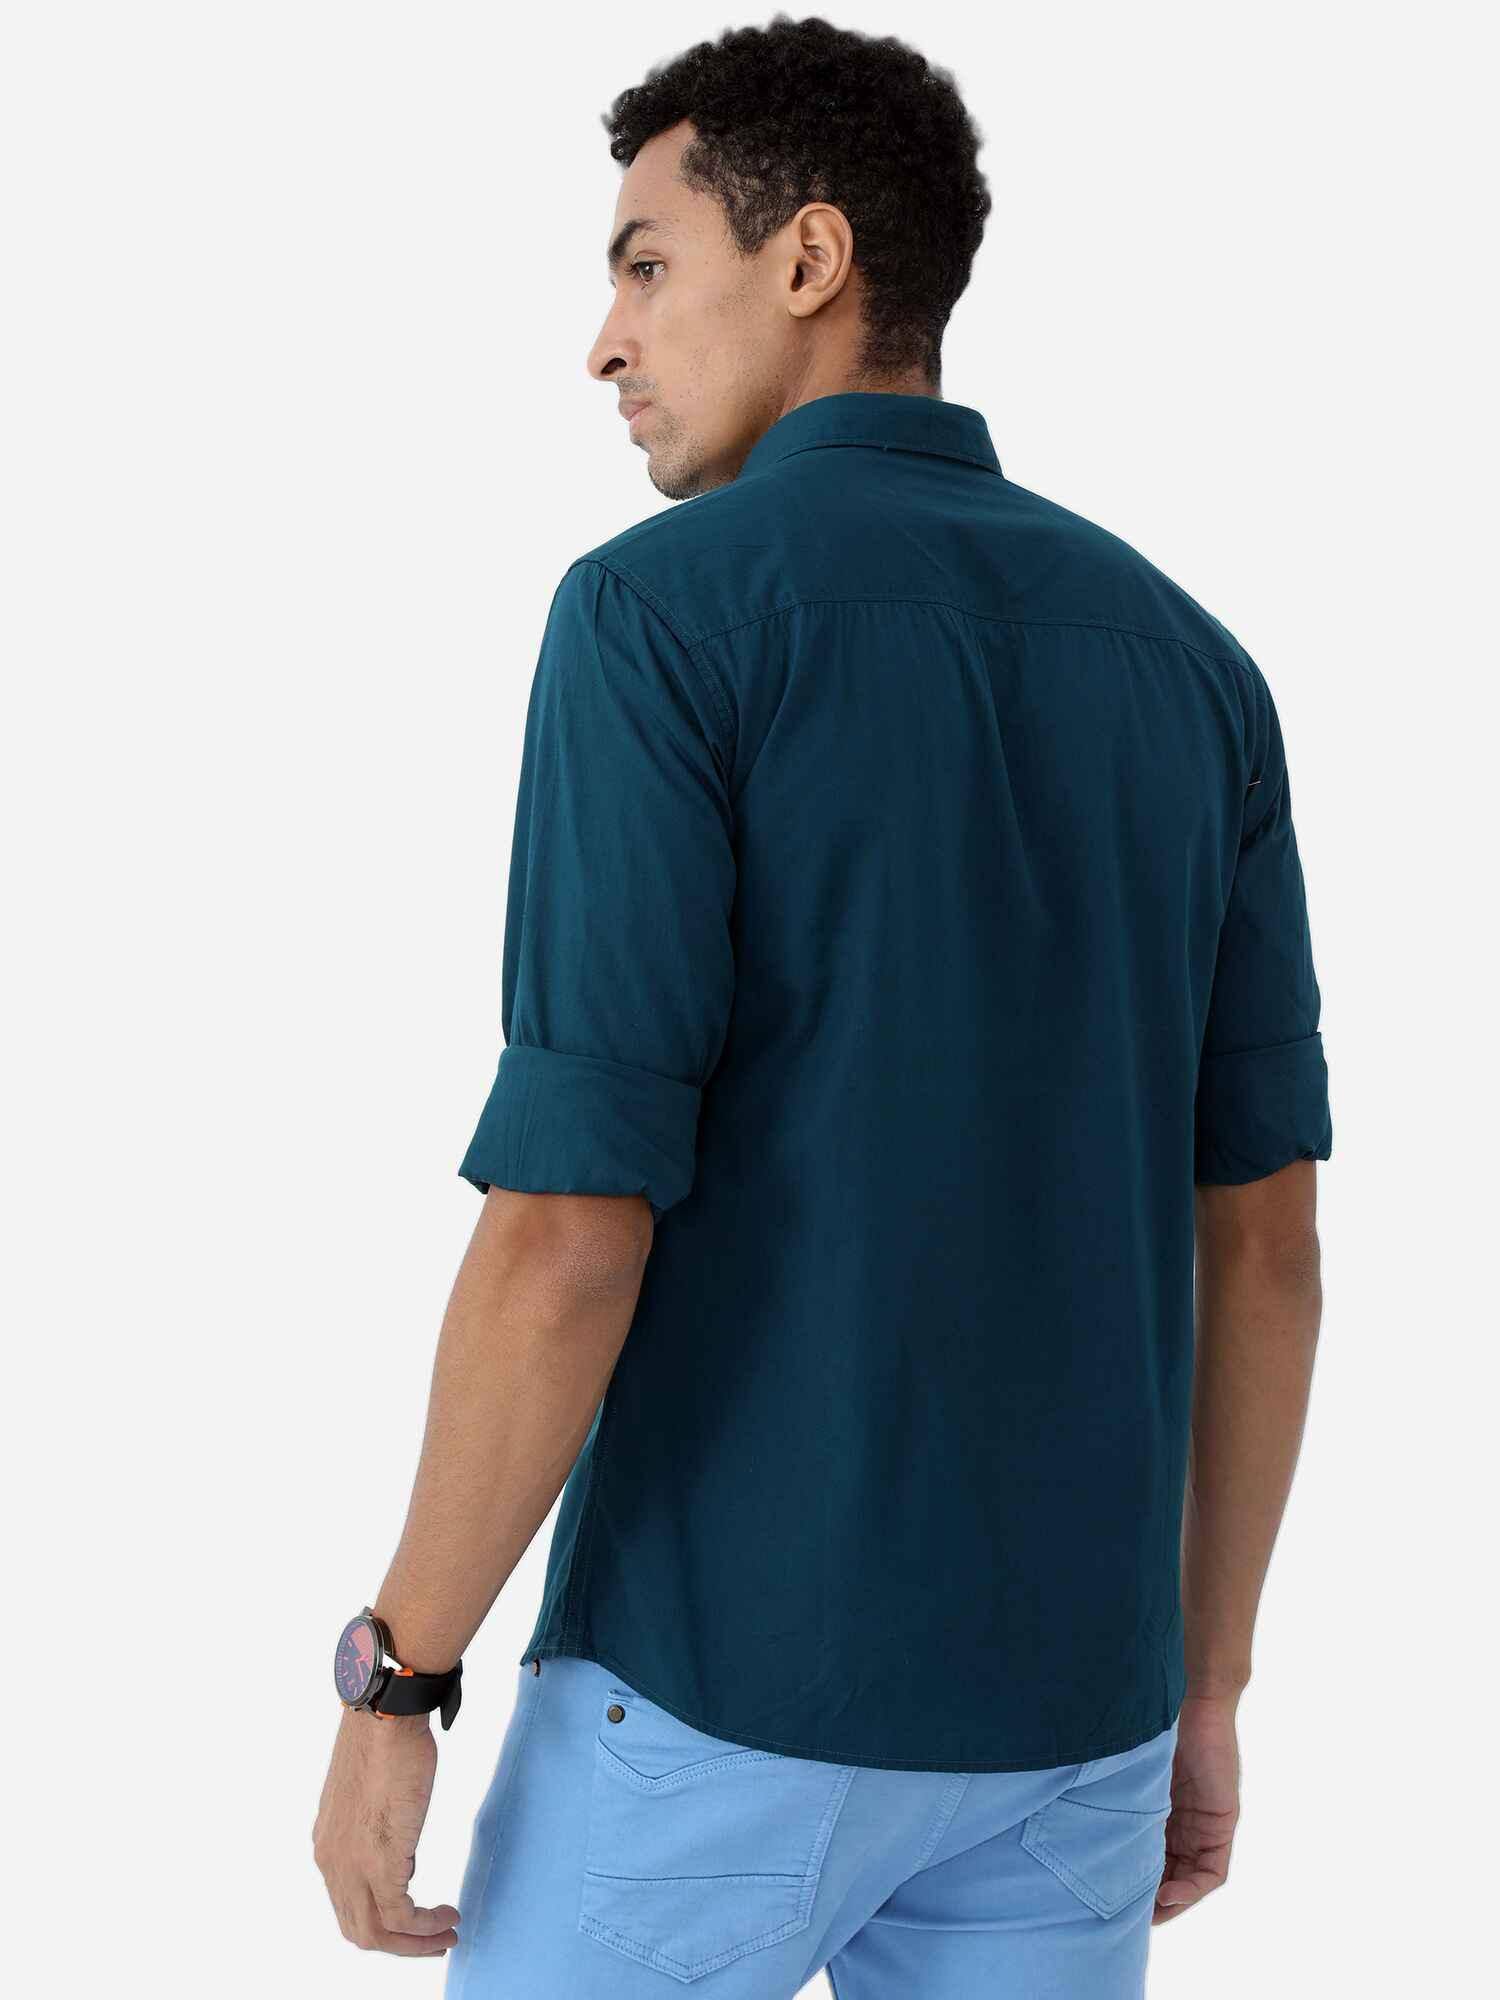 Teal Blue Solid Cotton Shirt Full Sleeve Shirt - Guniaa Fashions